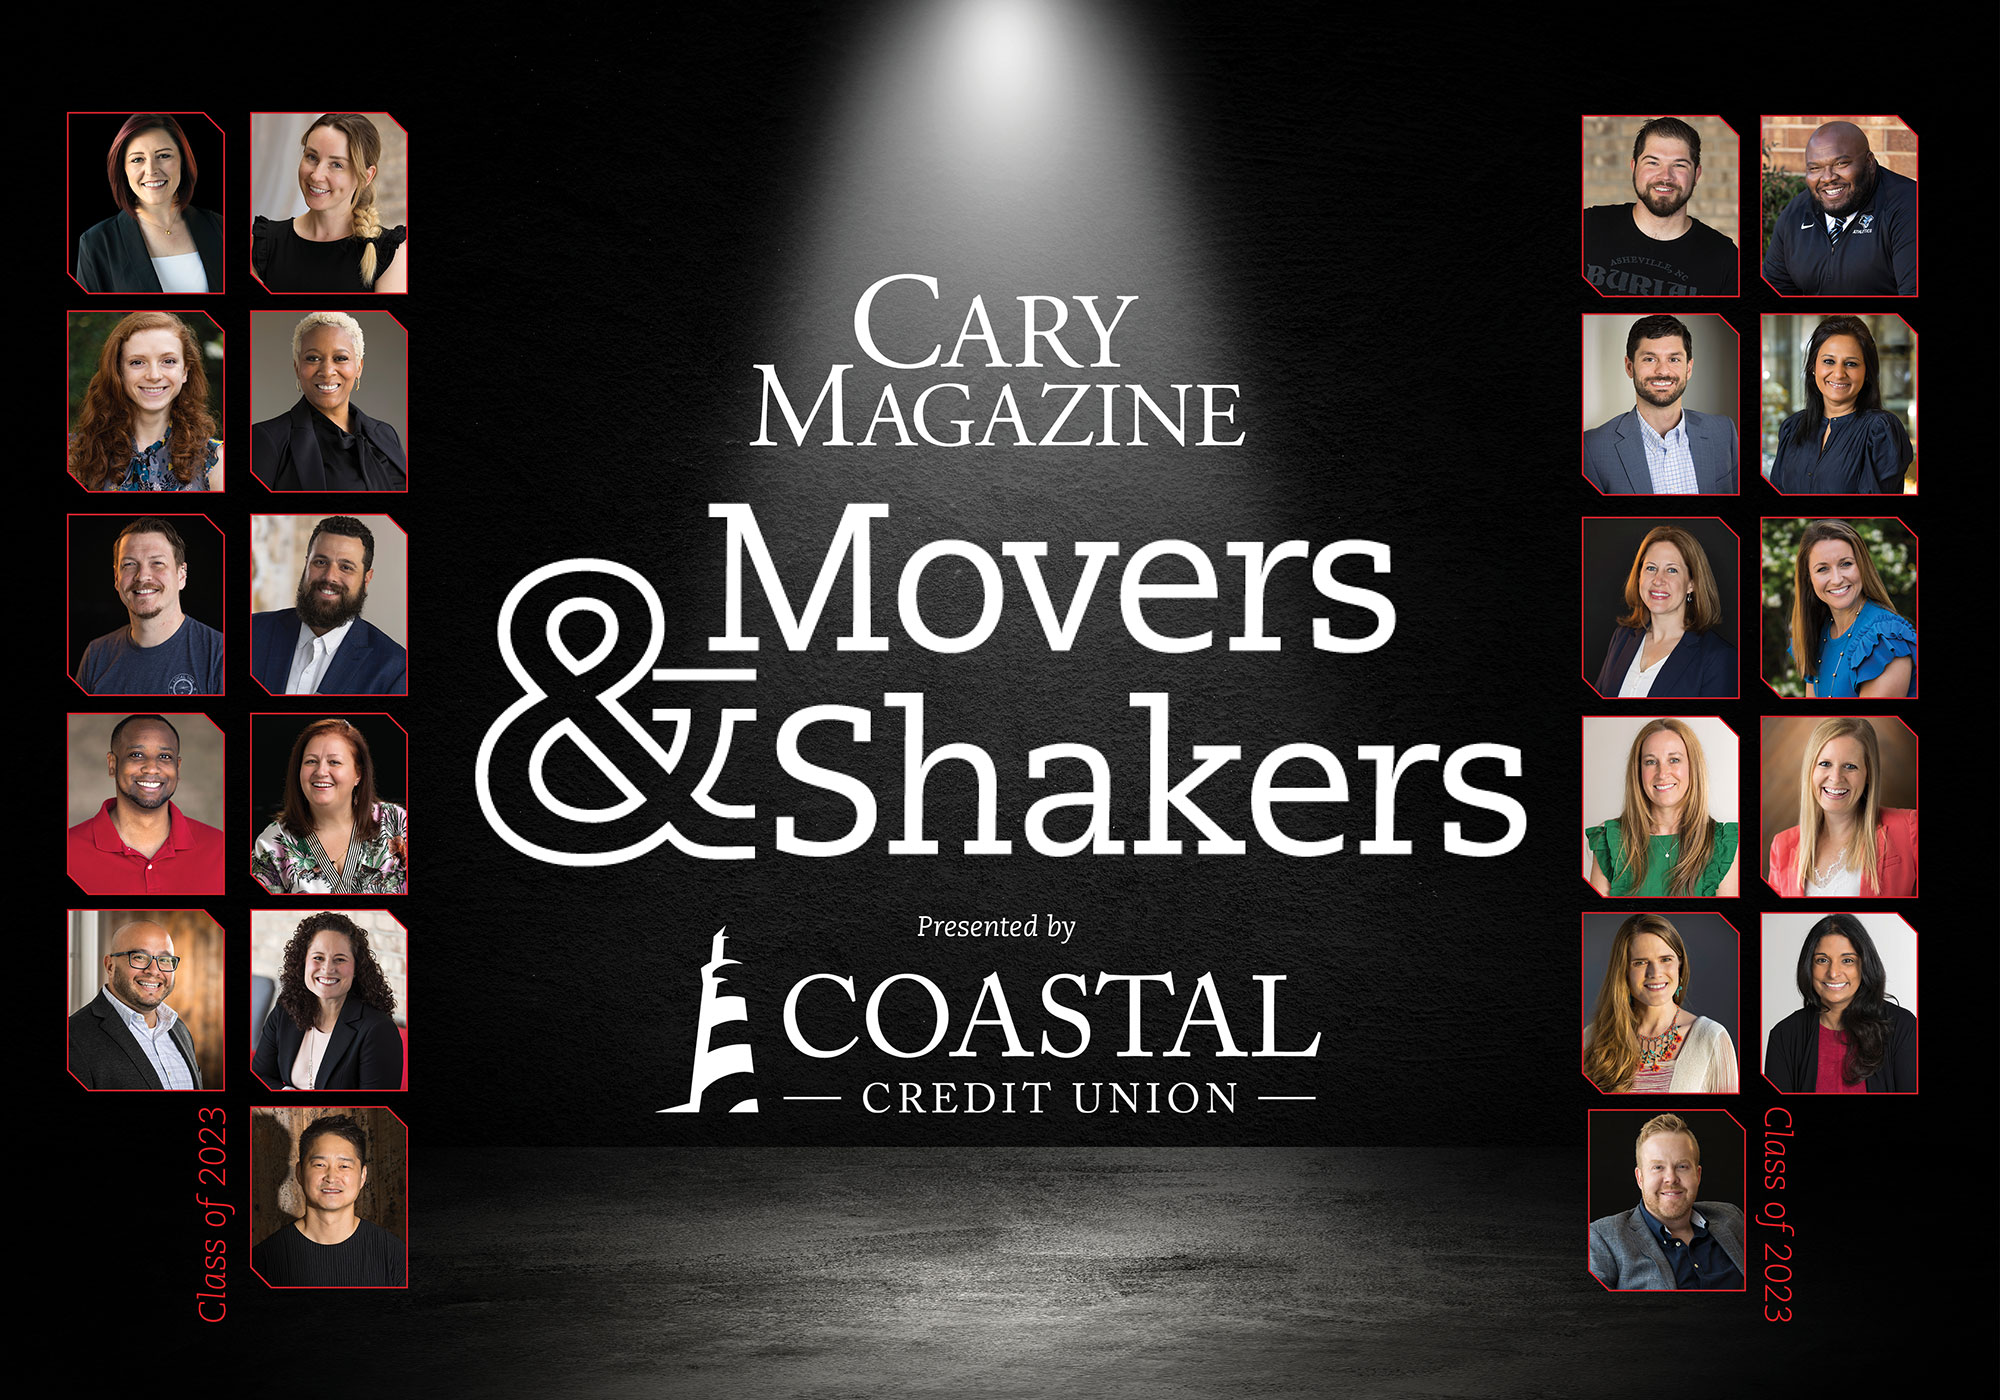 Movers & Shakers Award Honorees 2021 - Northshore Magazine